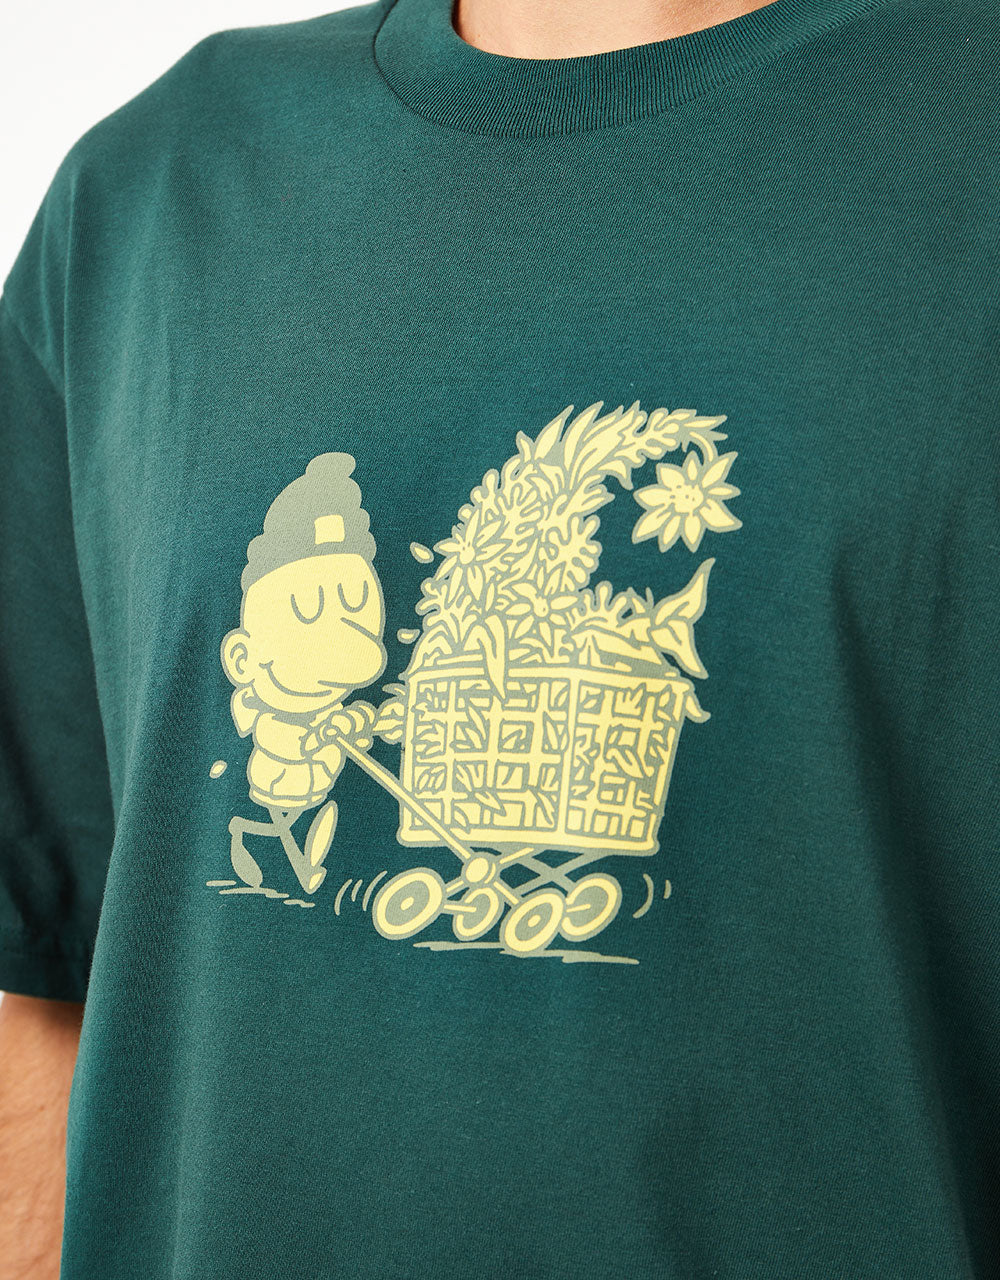 Carhartt WIP Shopper T-Shirt - Discovery Green